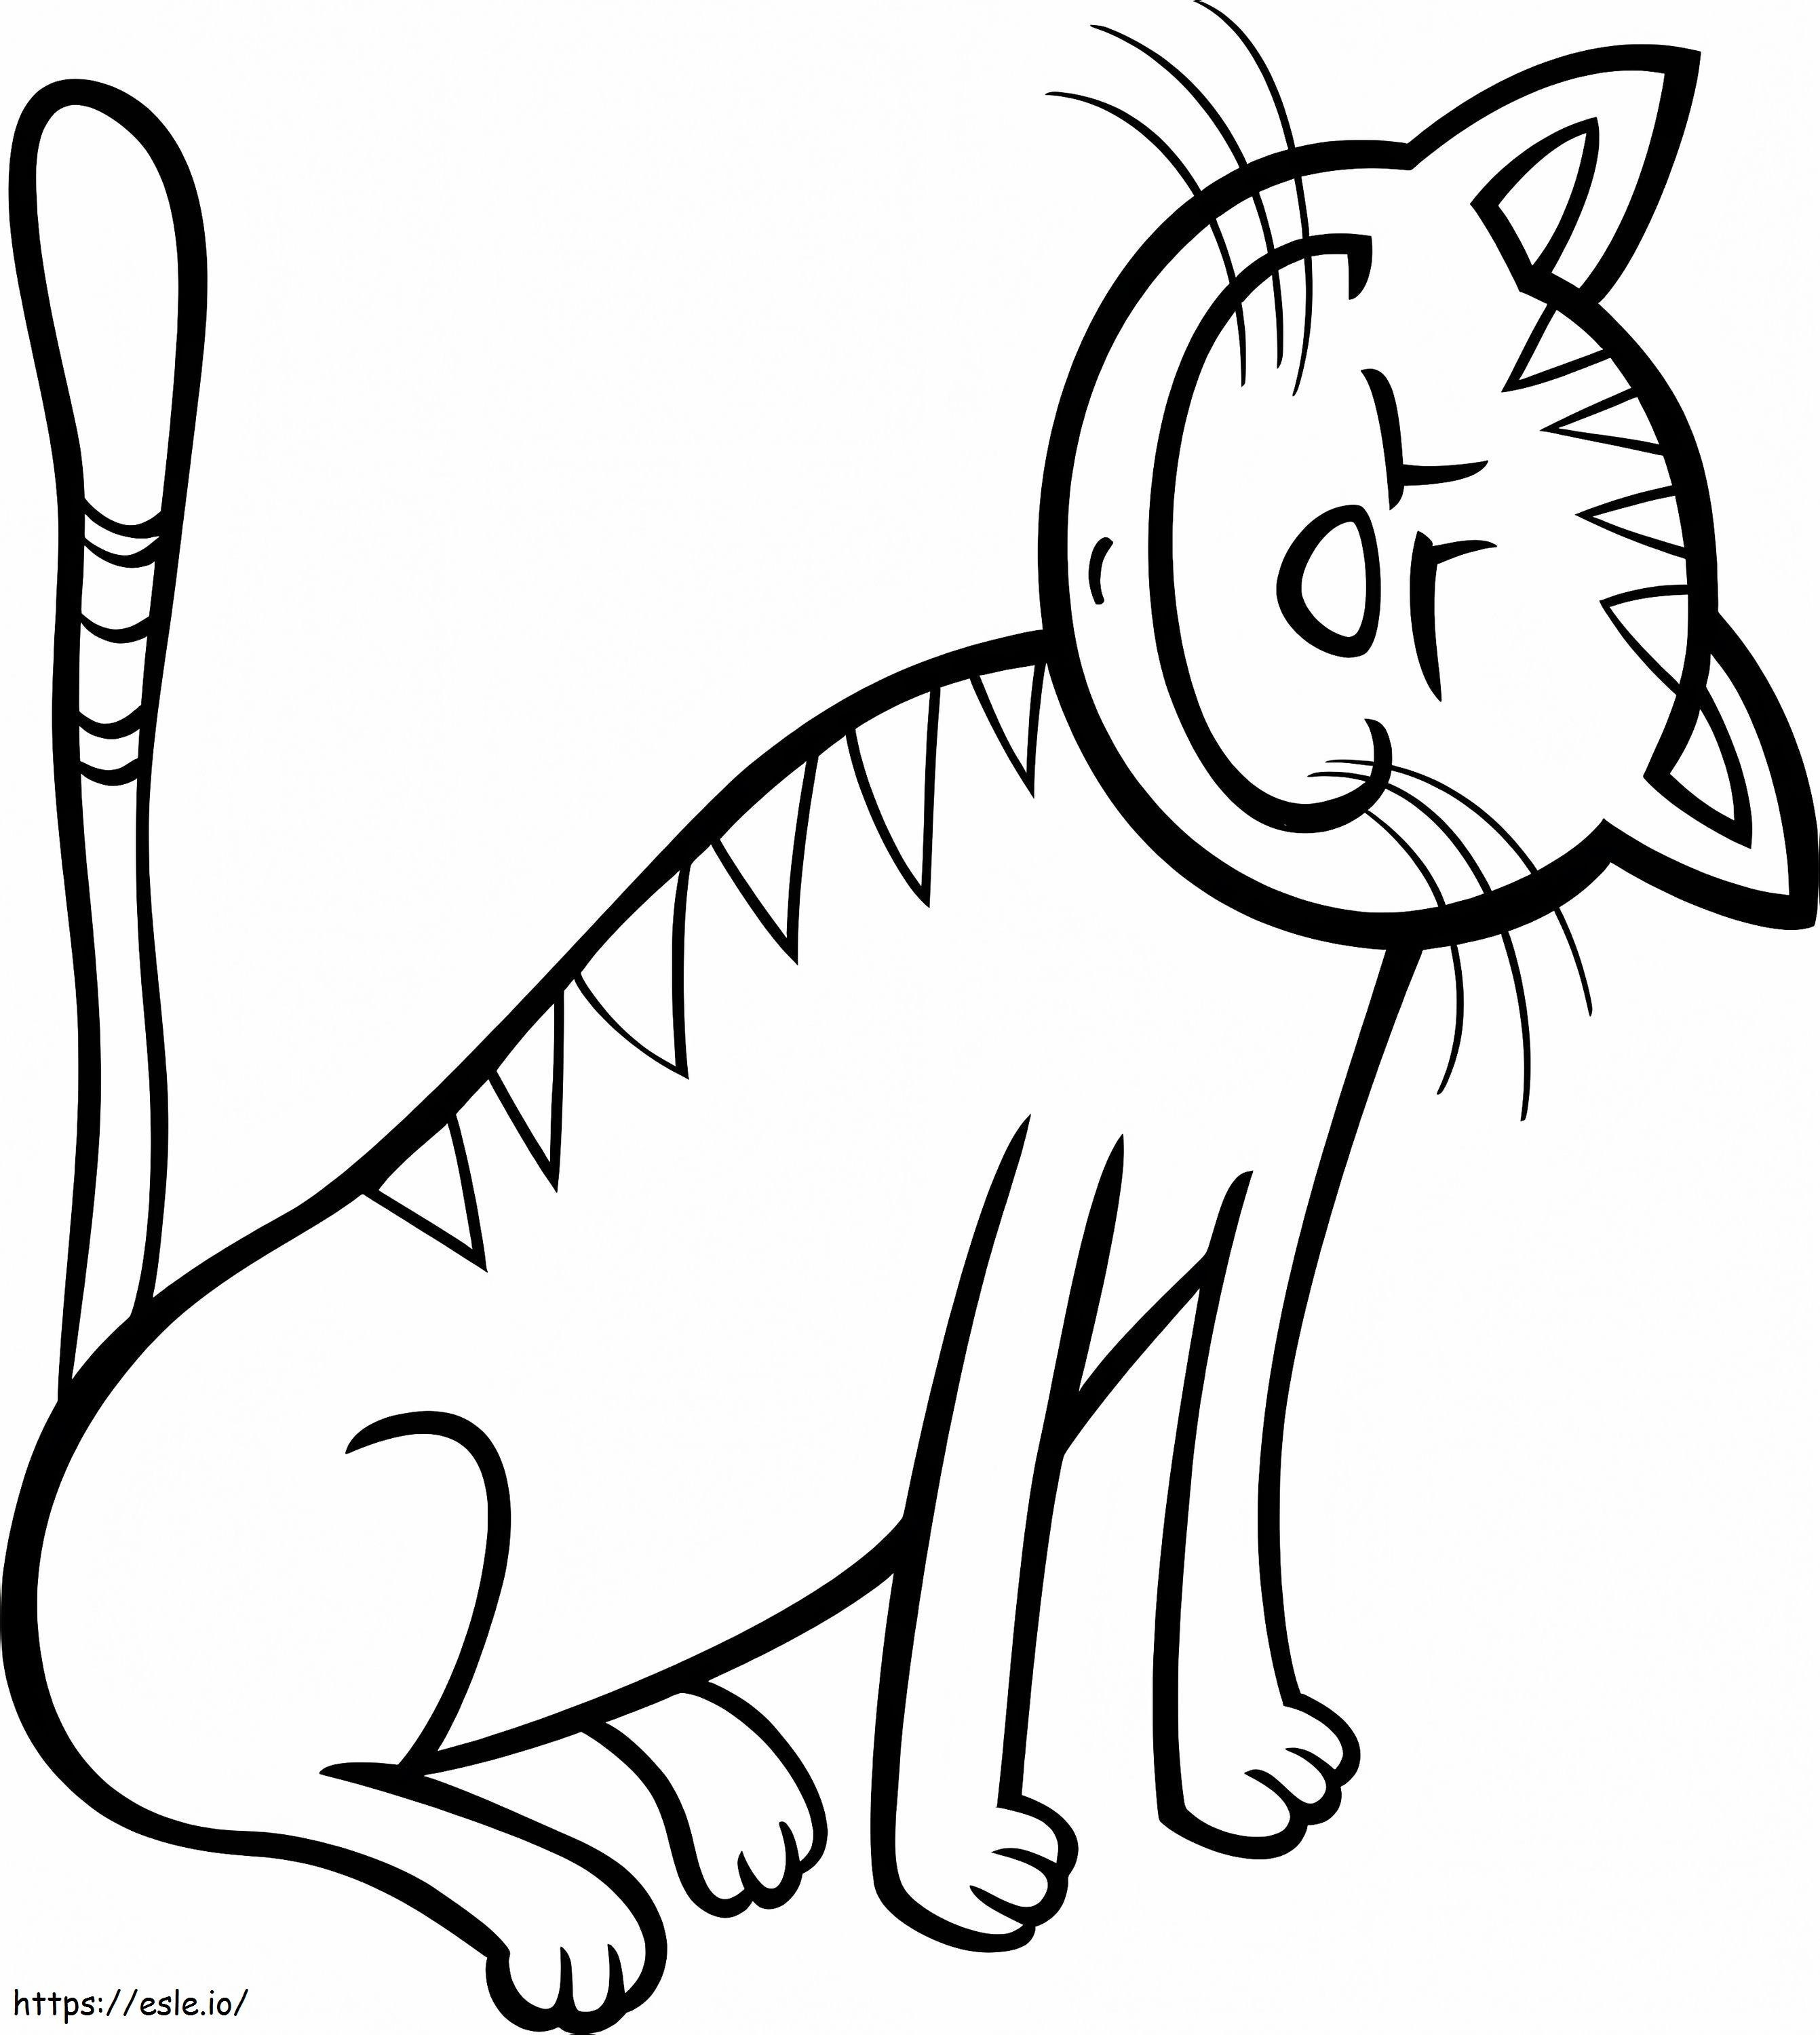 Lustige Cartoon-Katze ausmalbilder